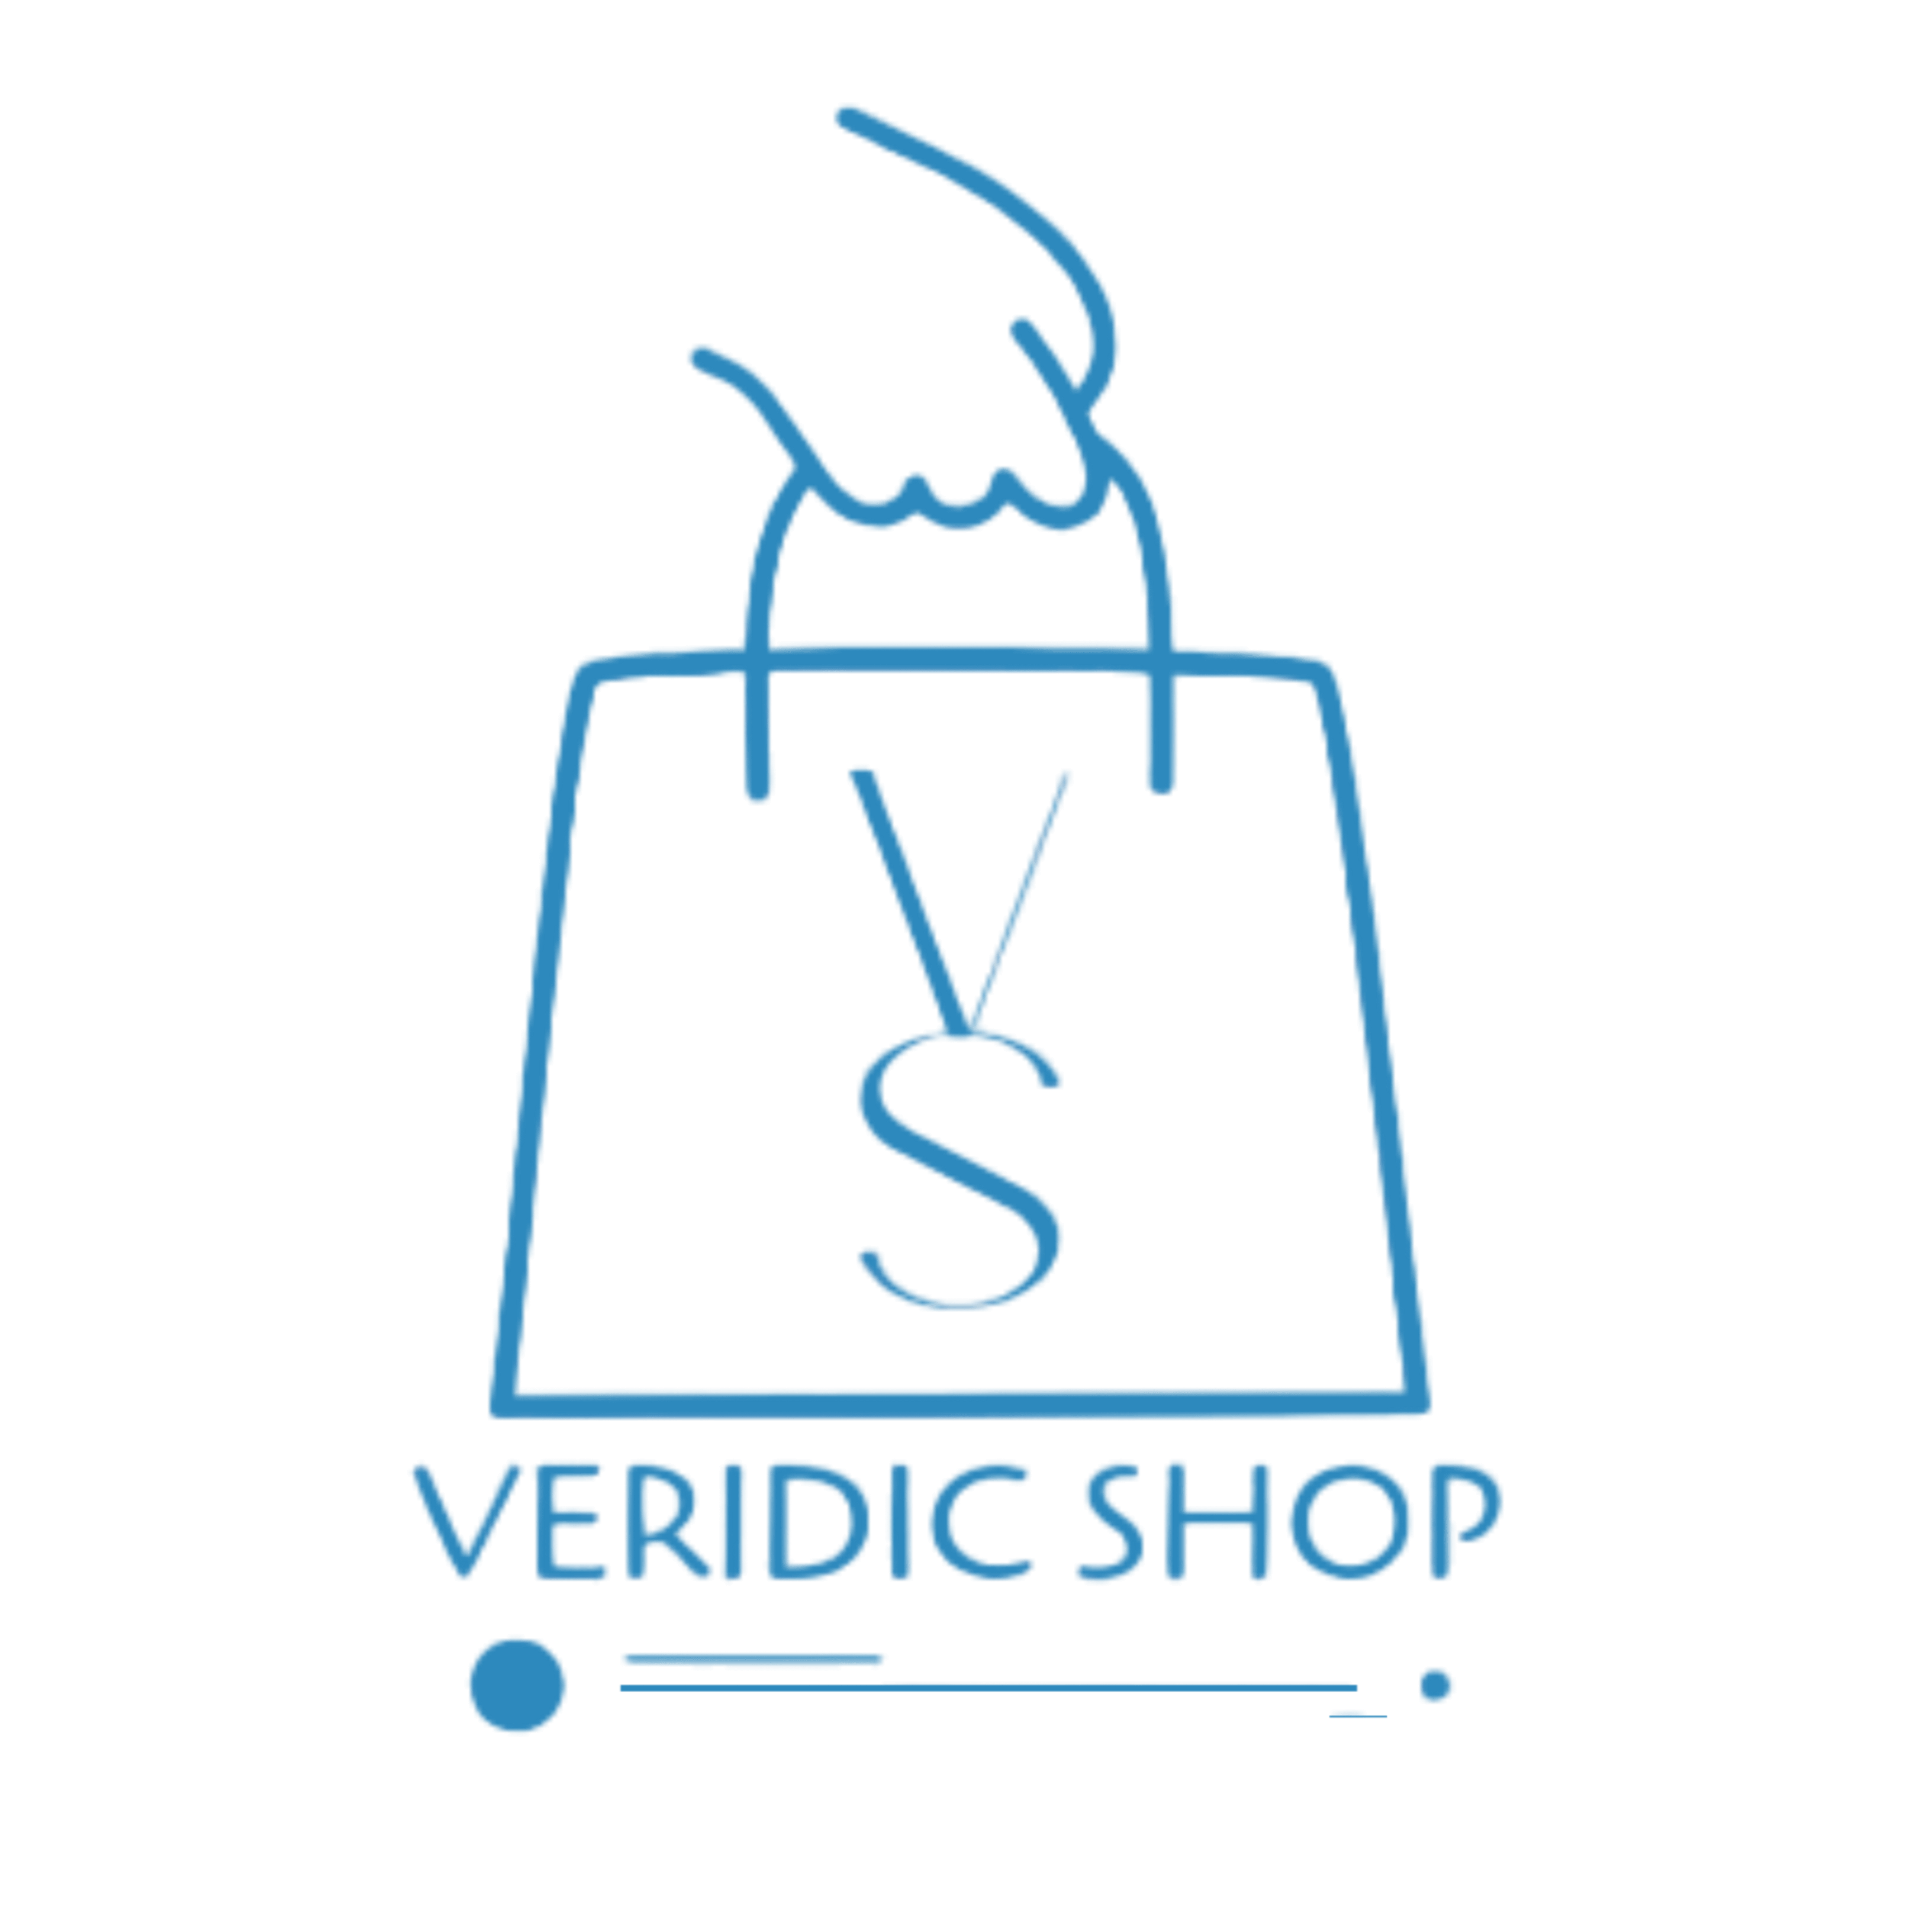 Veridic Shop